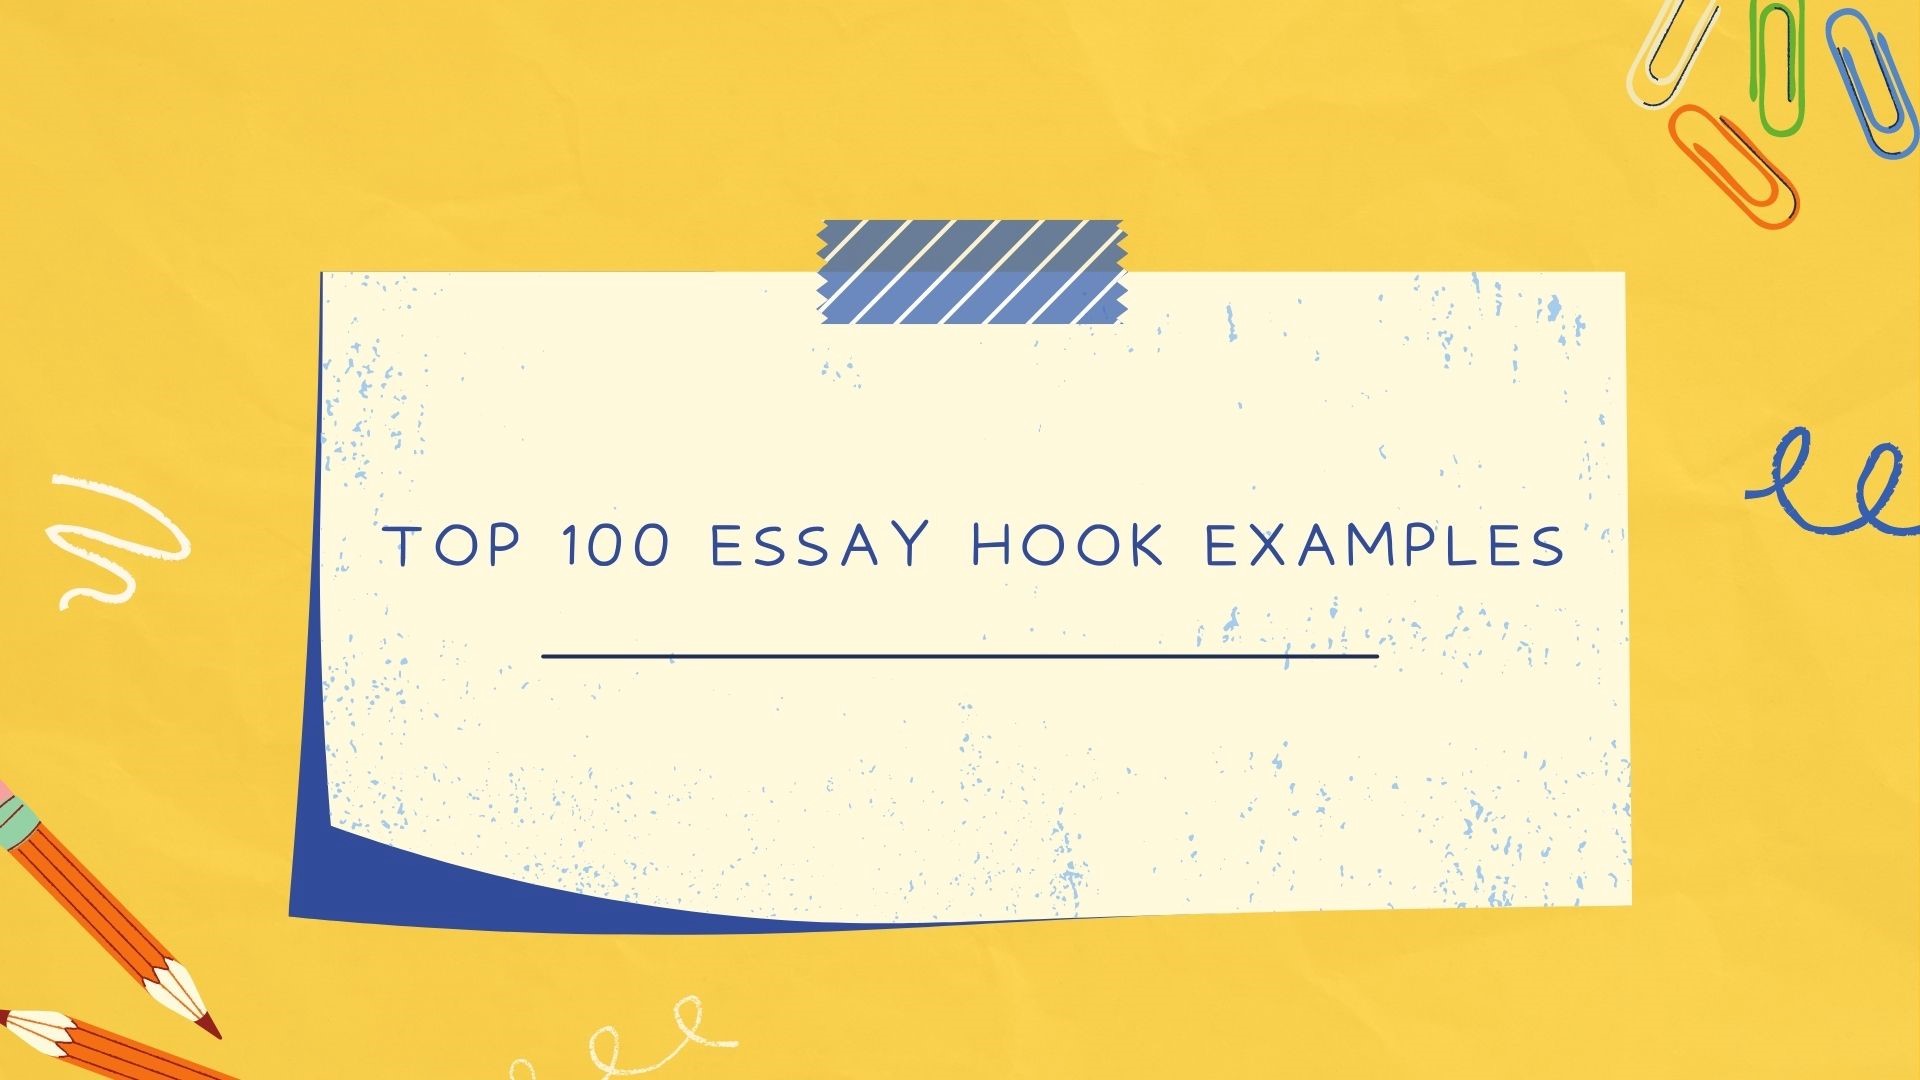 Top 100 Essay Hook Examples